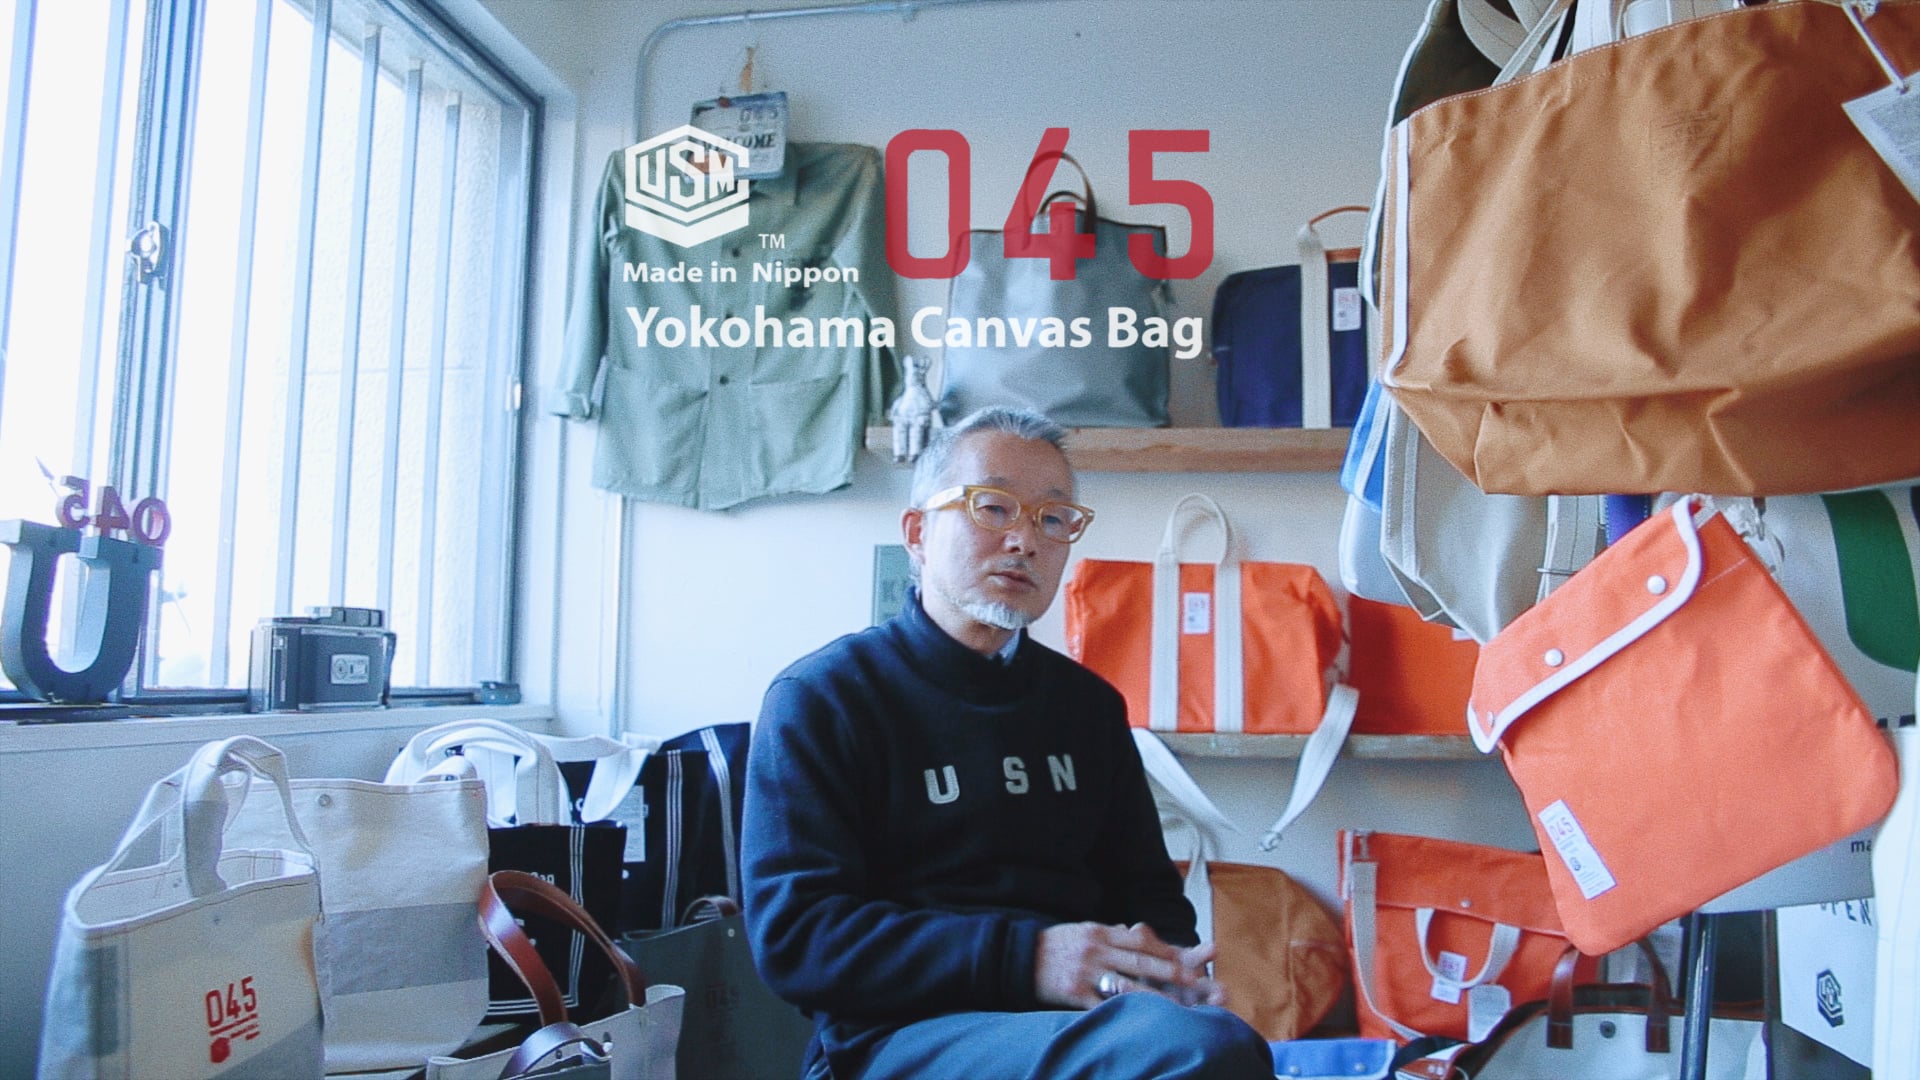 横濱帆布鞄 045 Yokohama Canvas Bag